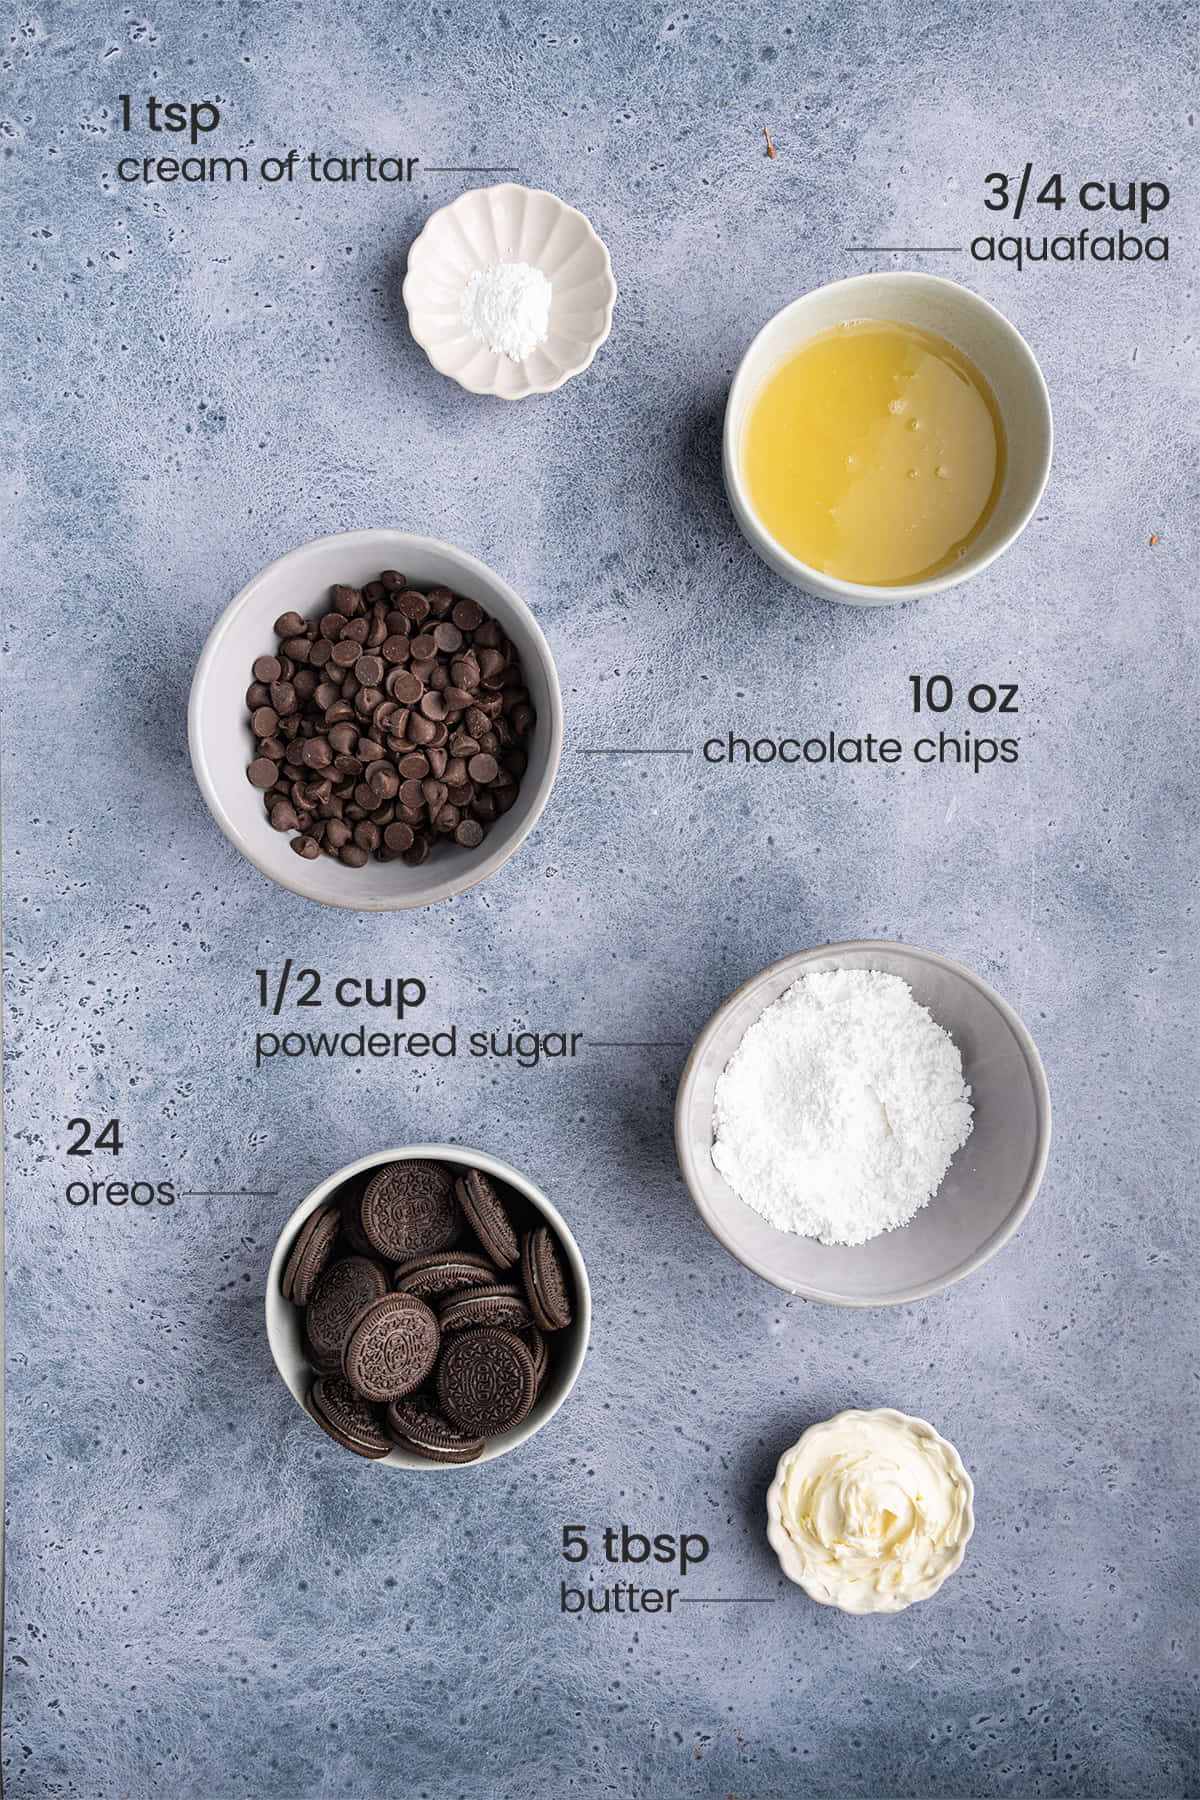 All ingredients for Vegan Chocolate Pie with Aquafaba including cream of tartar, aquafaba, vegan chocolate chips, powdered sugar, Oreos, and vegan butter